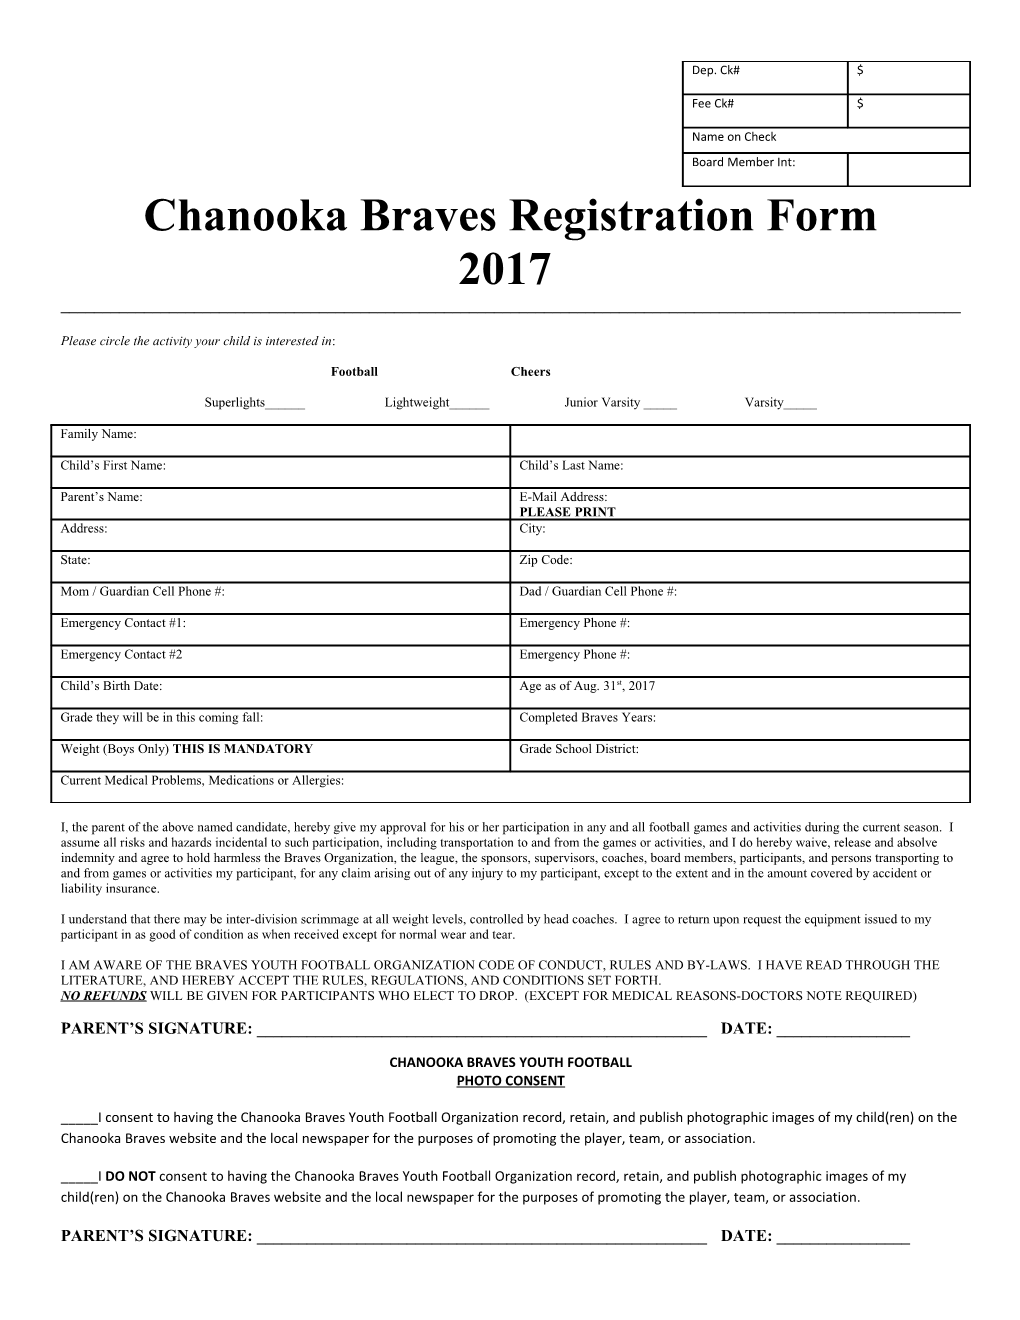 Chanooka Braves Registration Form